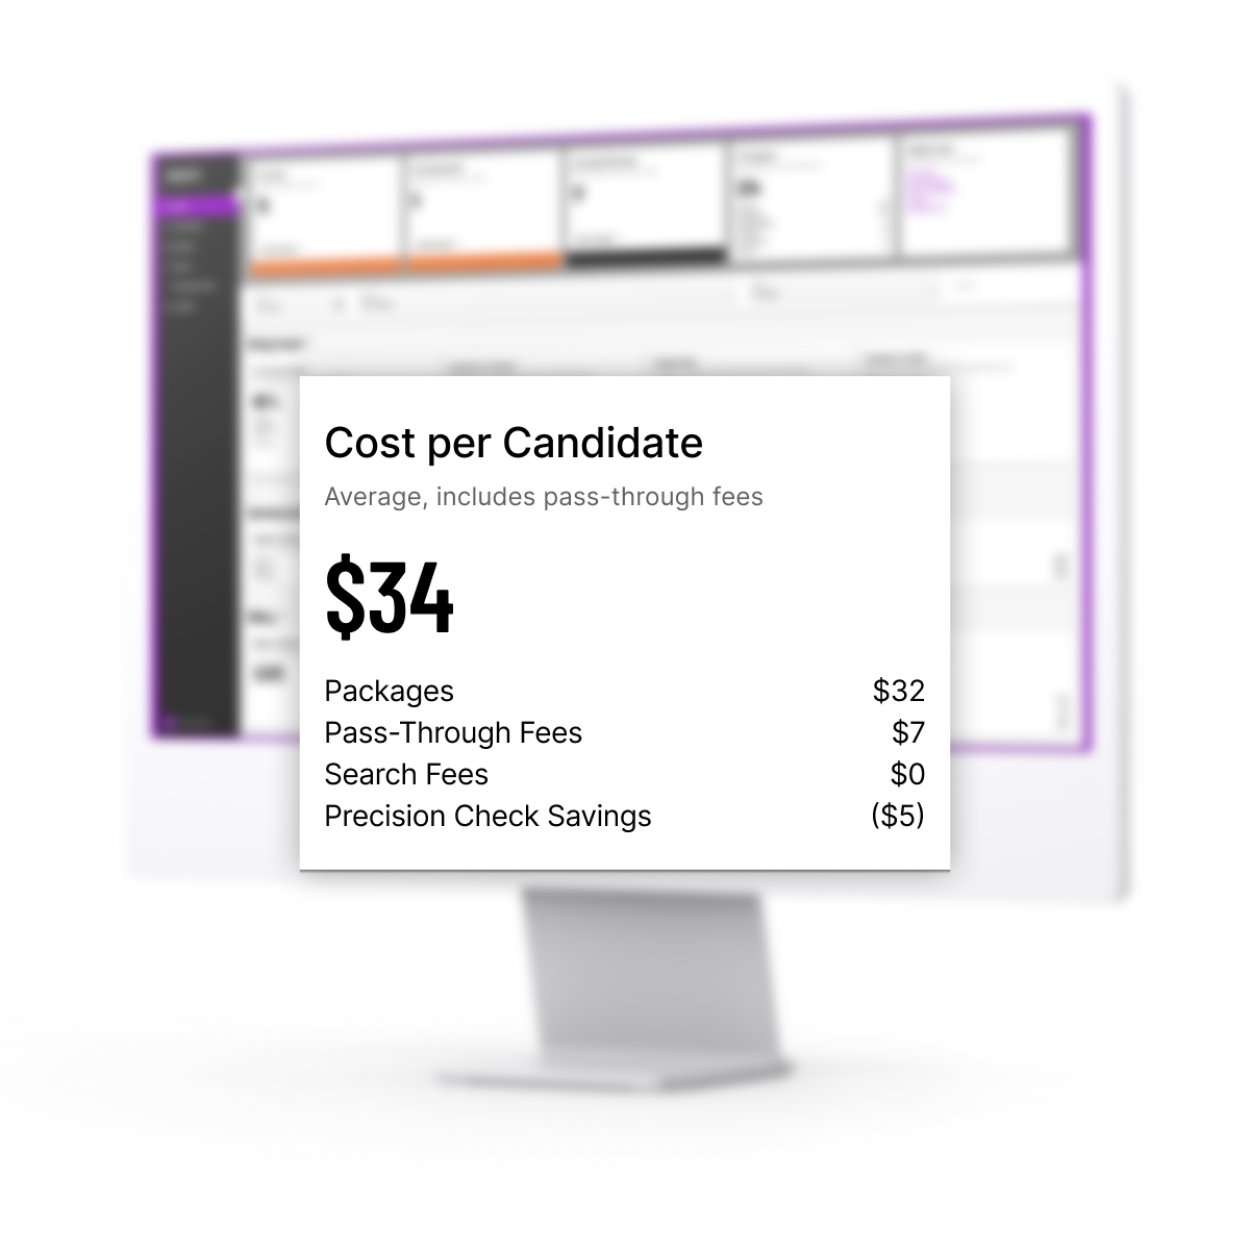 Yardstik Dashboard cost per candidate image